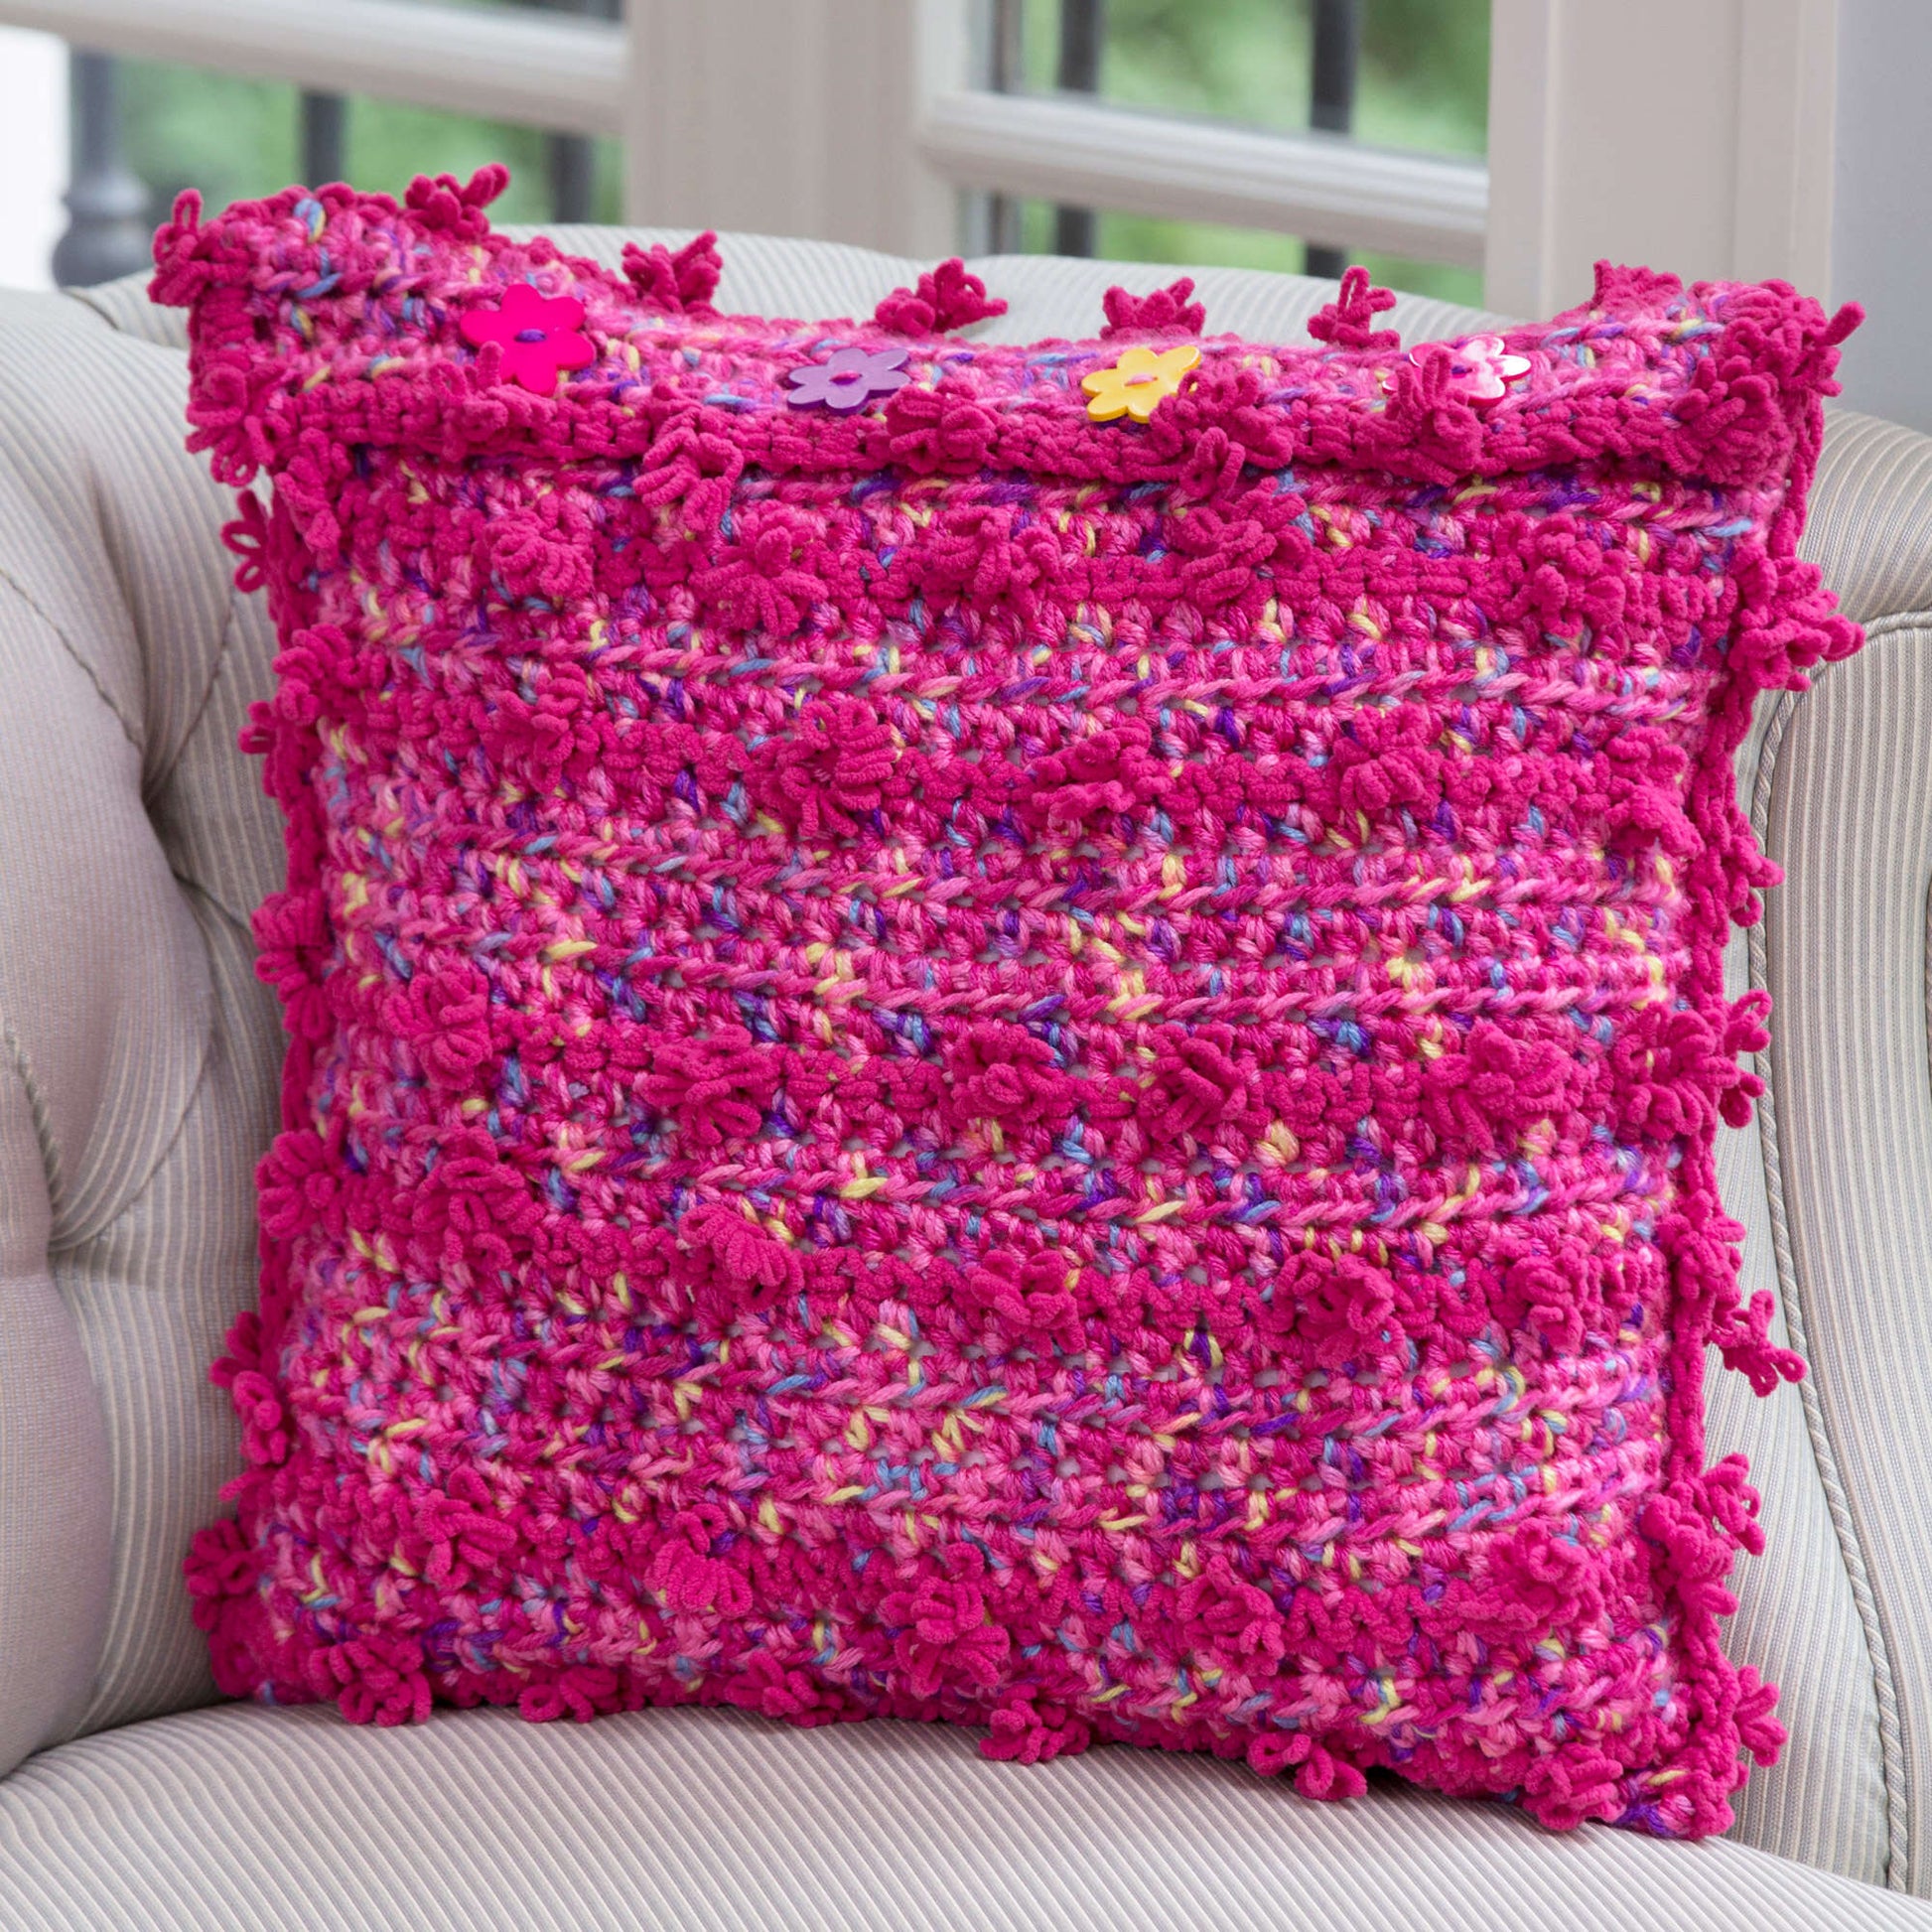 Free Red Heart Crochet Posh Pillow Pattern